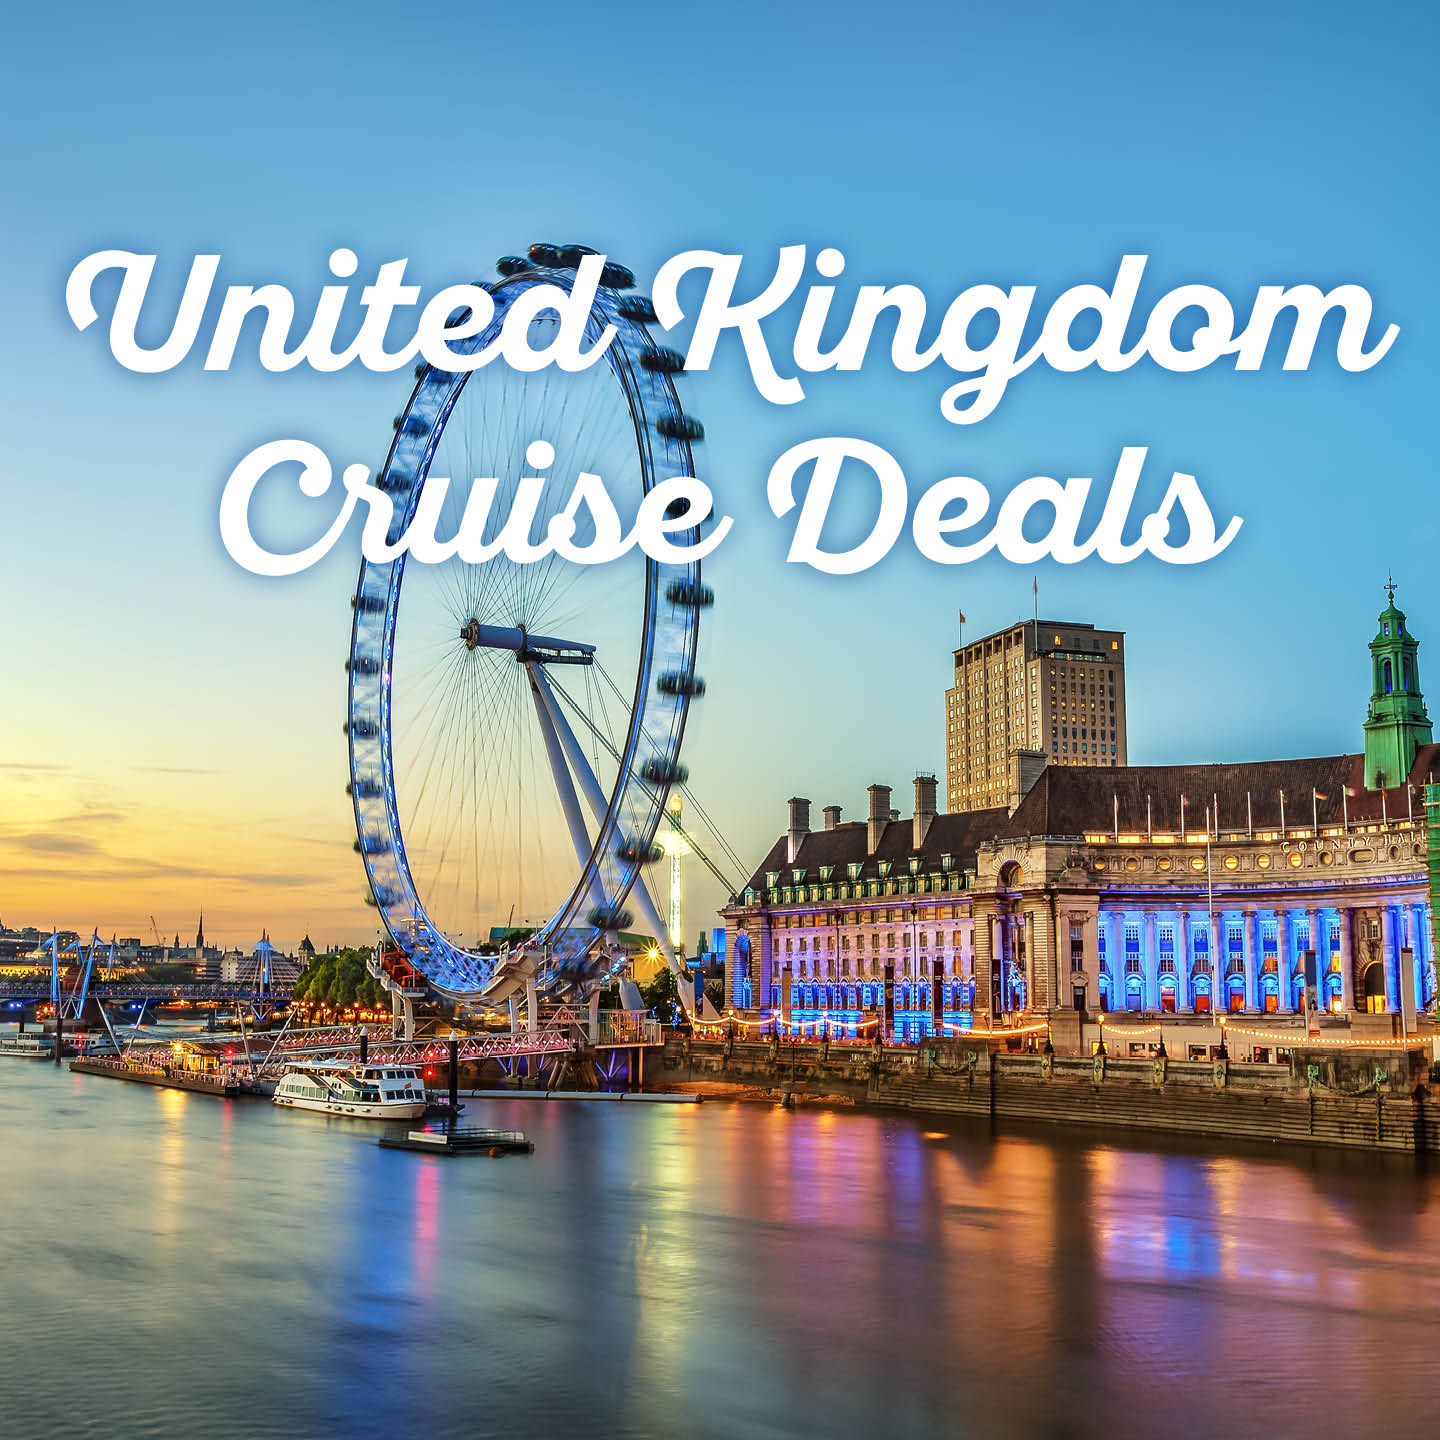 uk-cruise-deals1-thumb.jpg